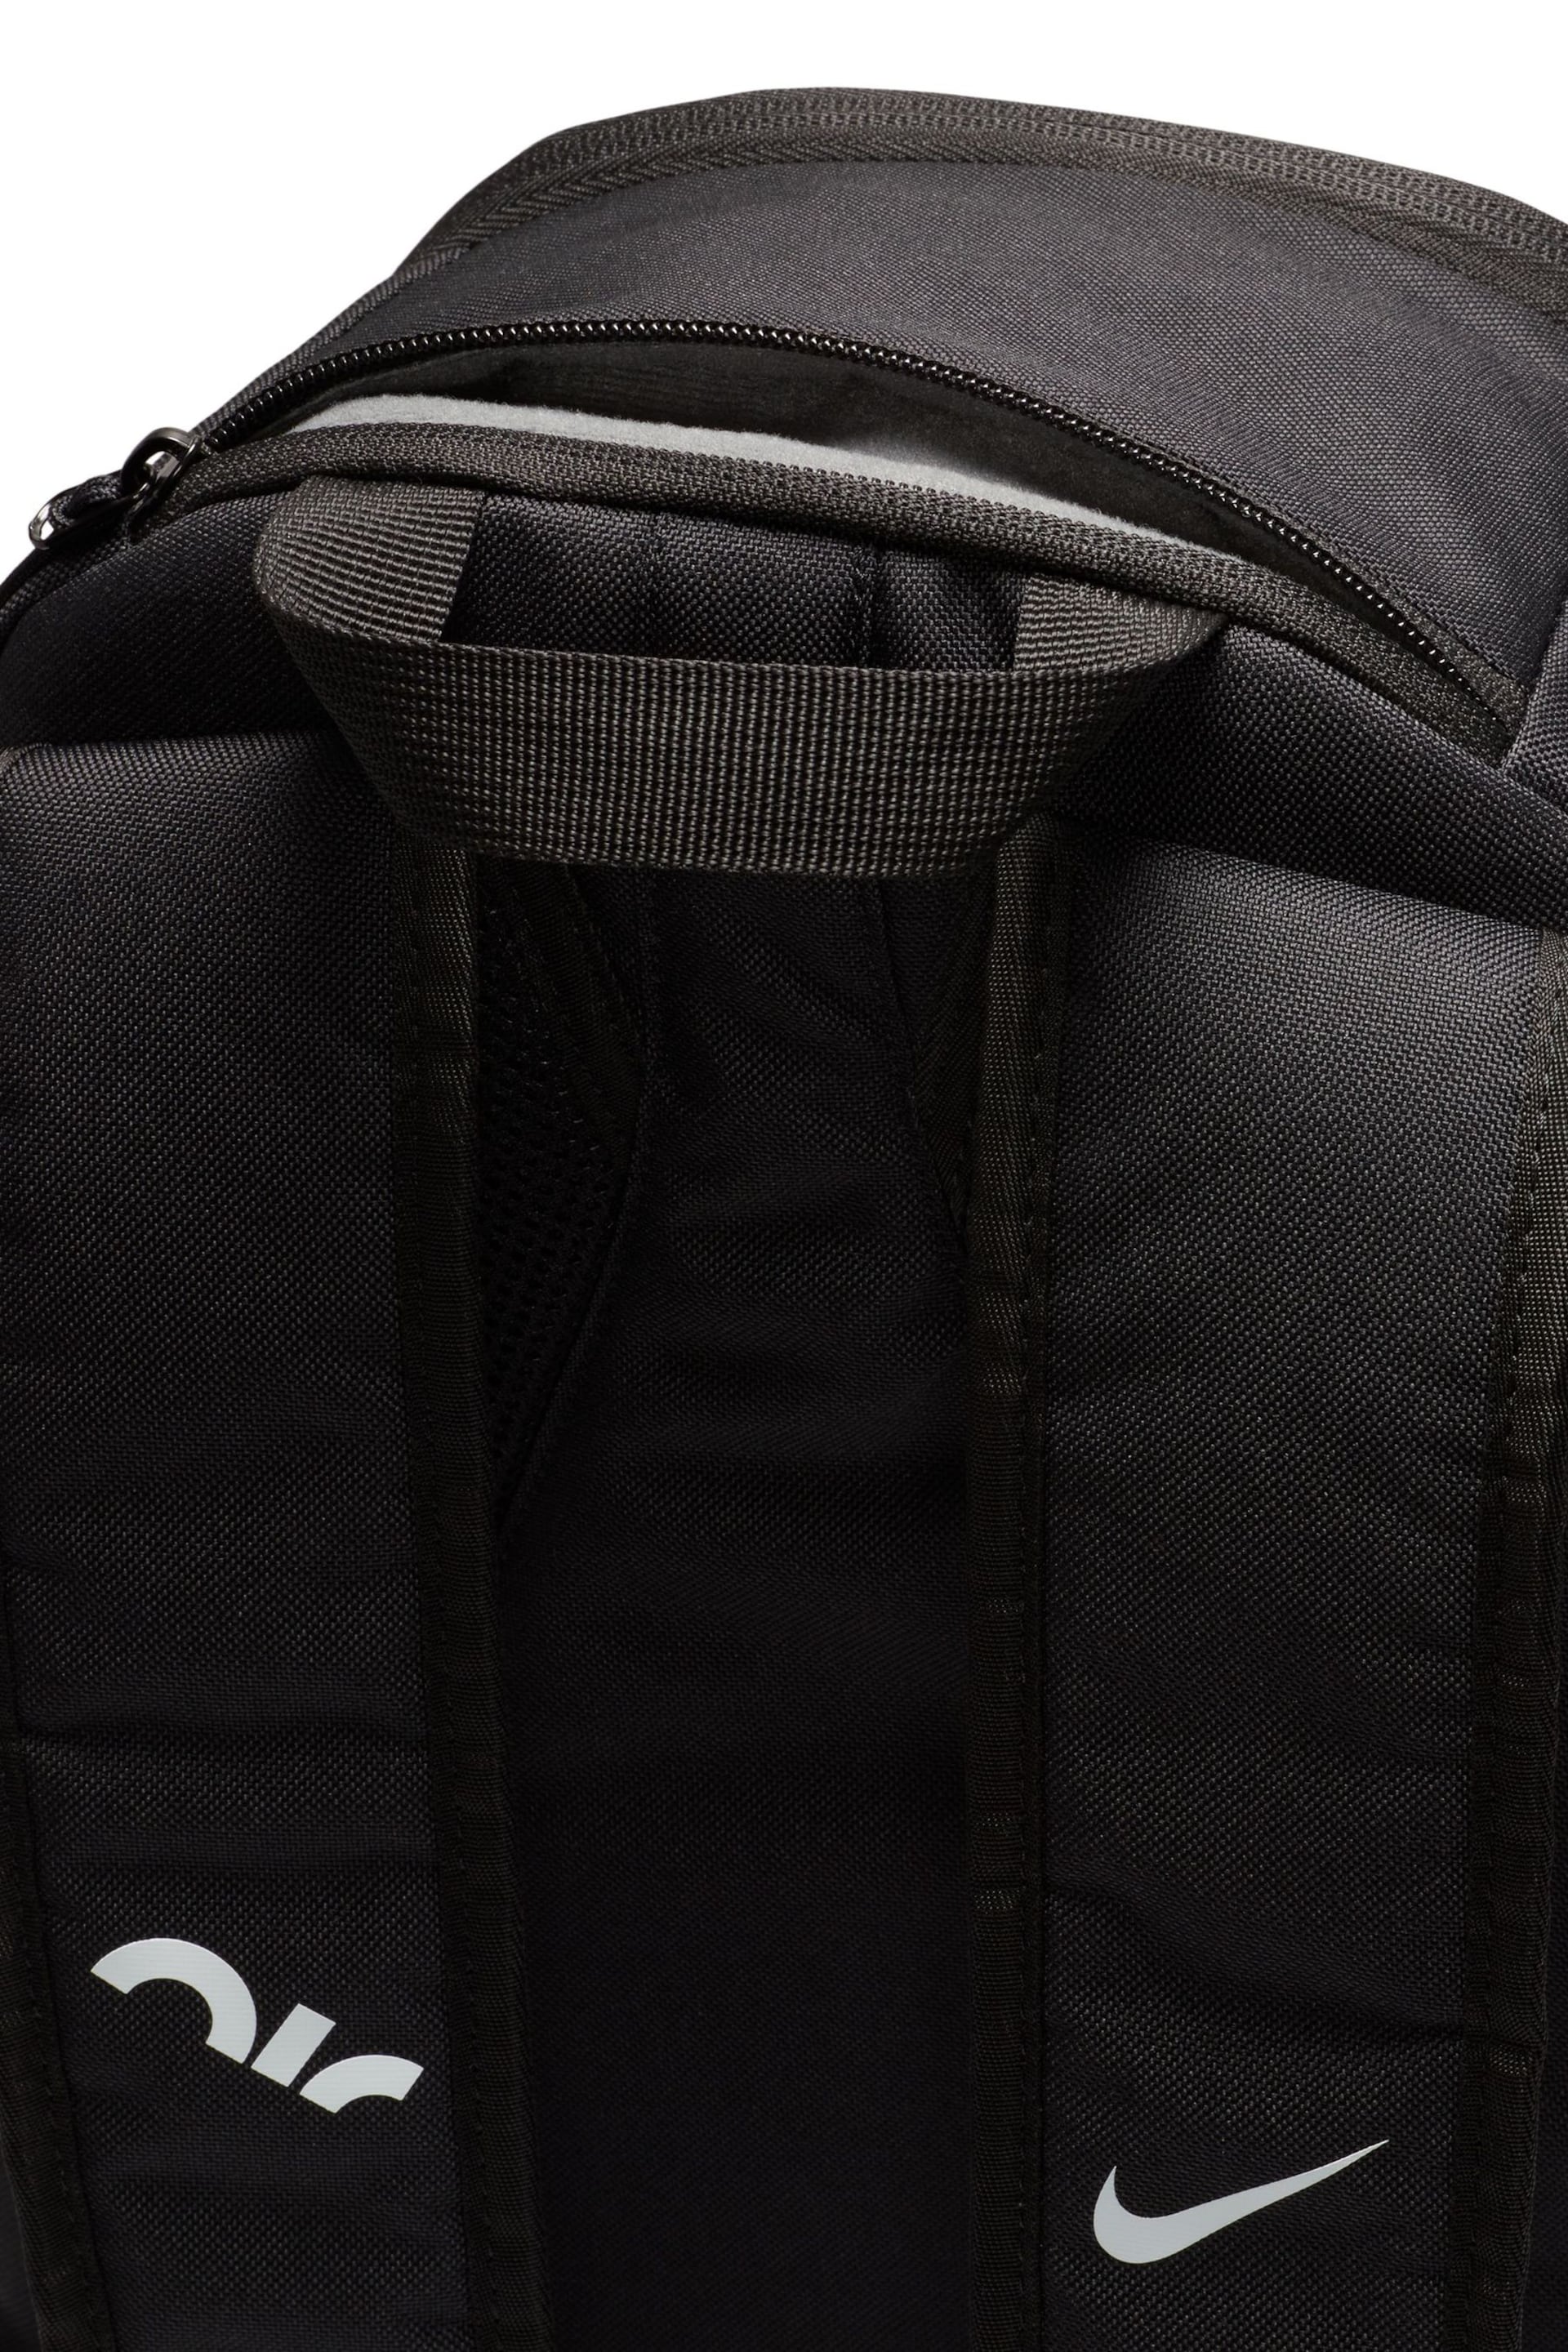 Nike Black Air GRX Backpack - Image 7 of 9